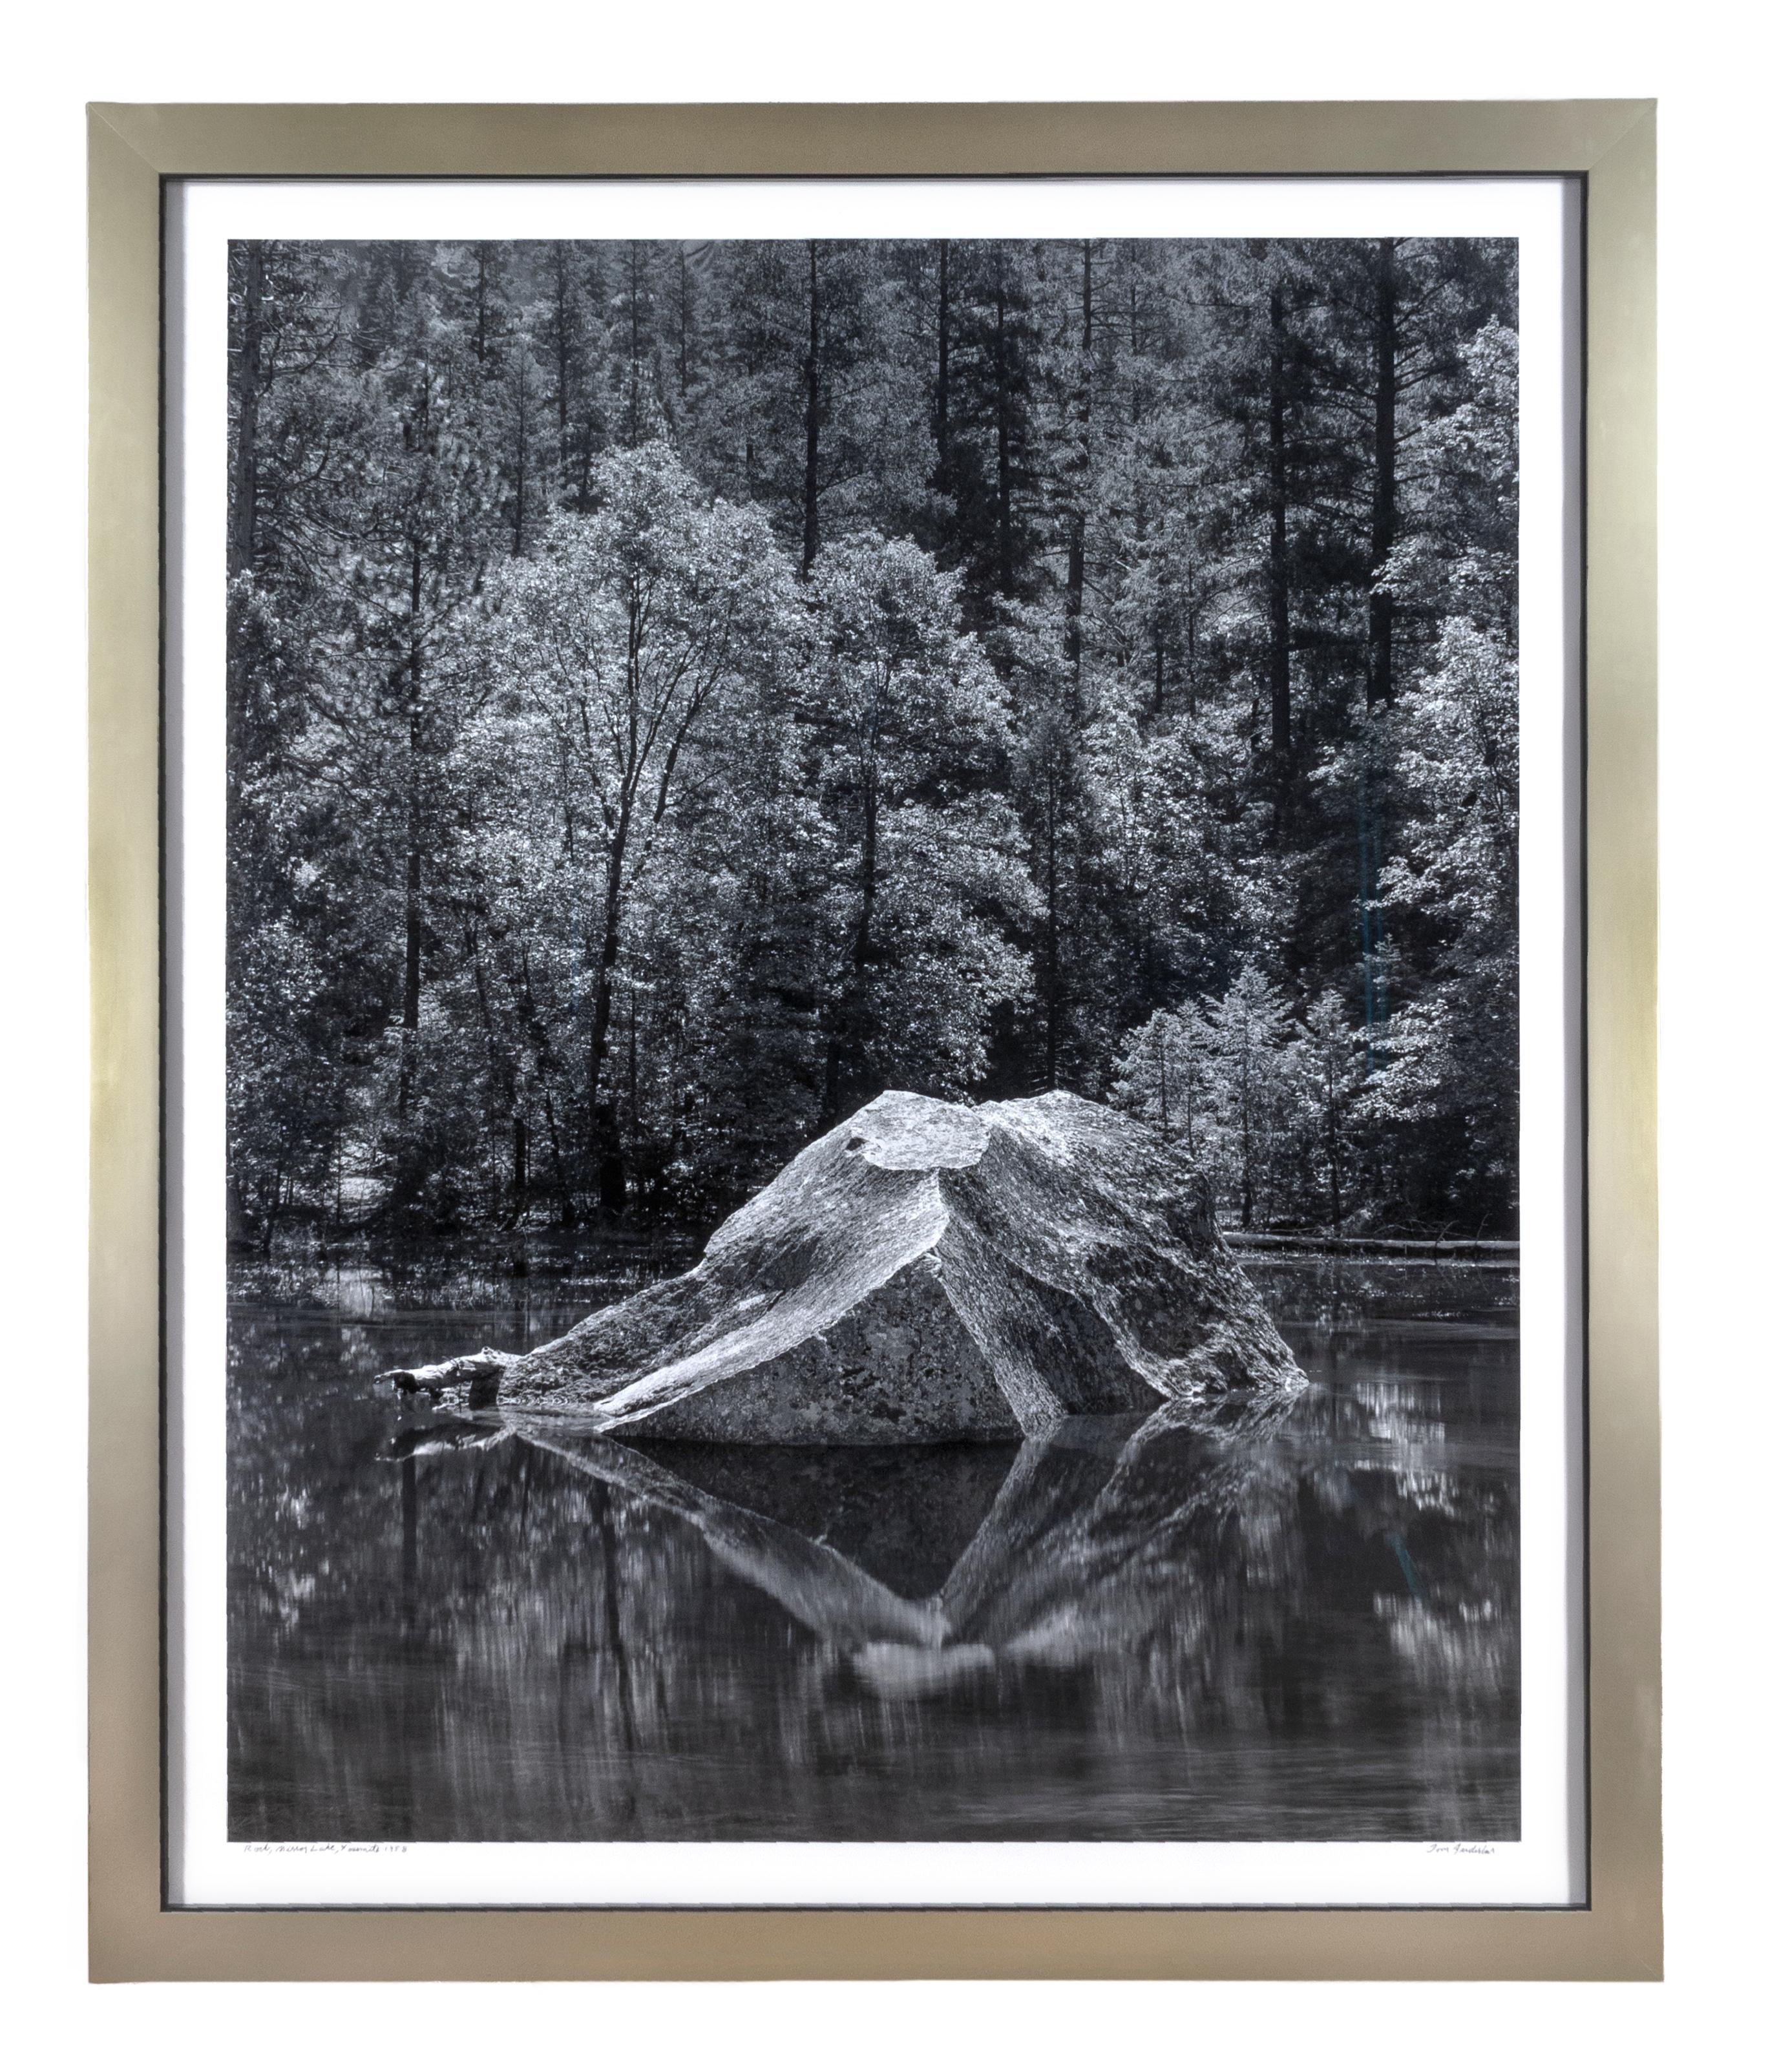 Thomas Ferderbar Landscape Photograph - "Rock, Mirror Lake, CA (Yosemite), " Photograph signed by Tom Ferderbar